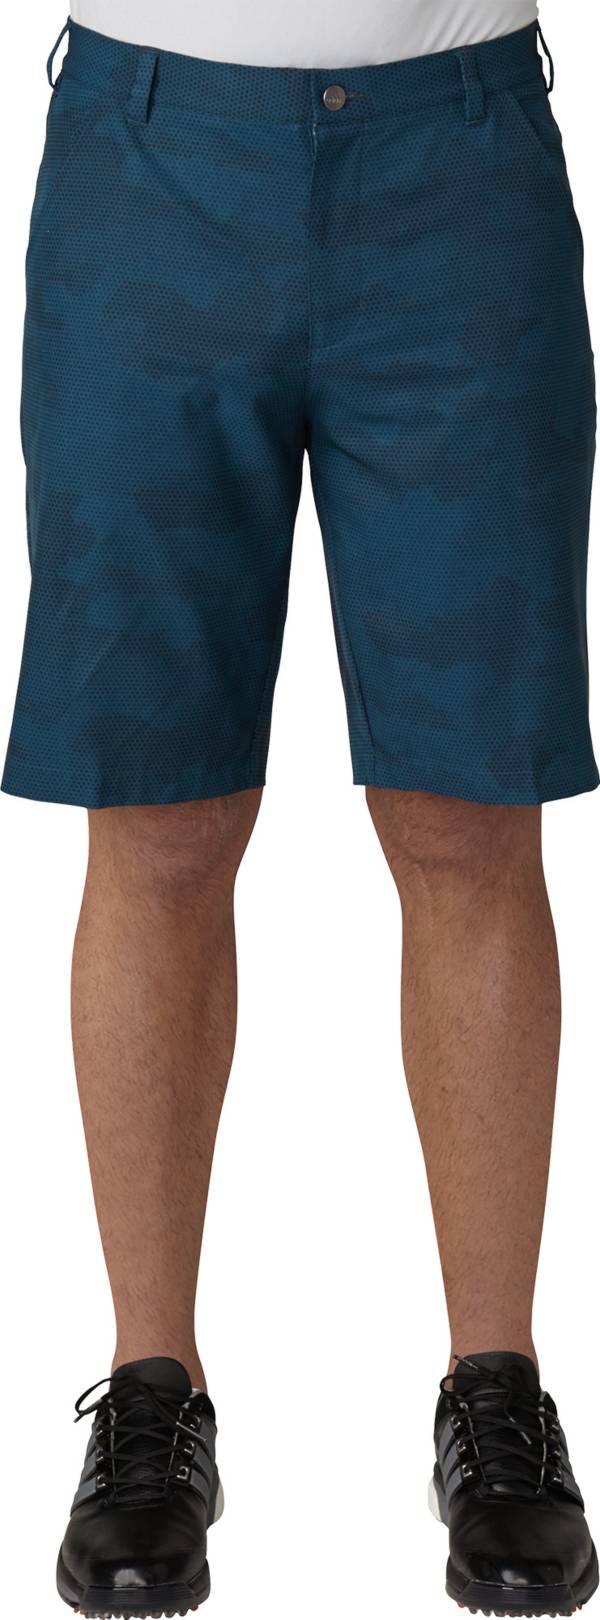 adidas Men's Ultimate Camo Print 10" Shorts product image